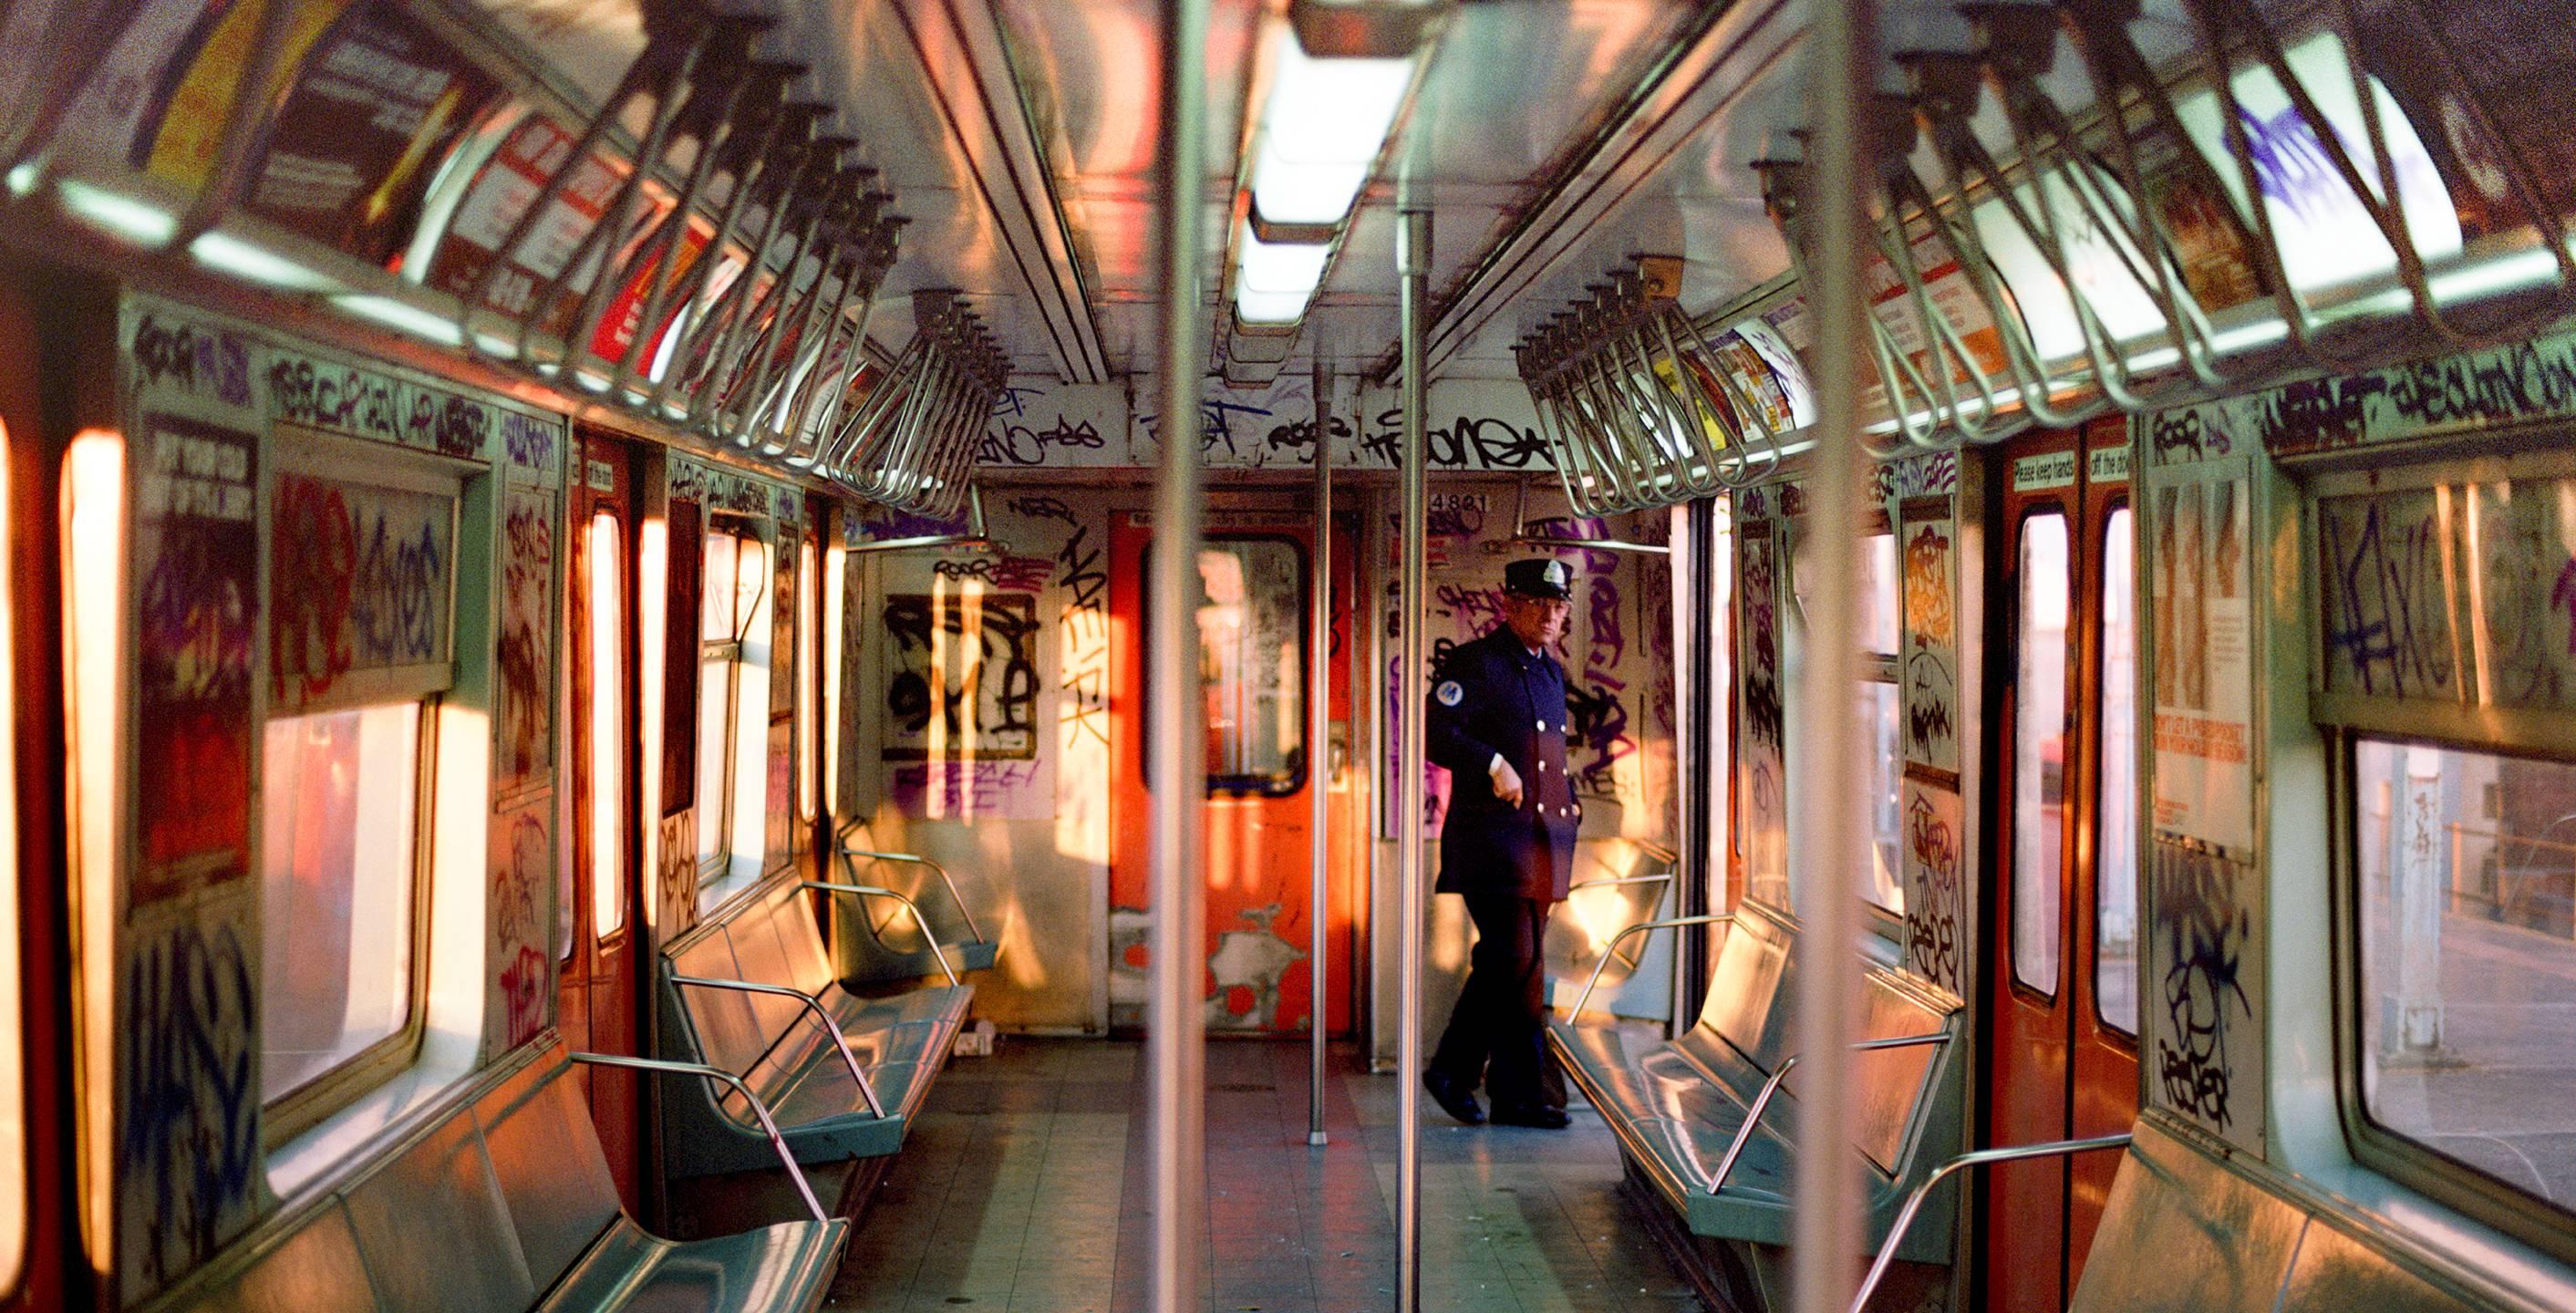 Robert Herman Color Photograph - Train Conductor, New York City, 1985 (1980s NY subway art photograph)